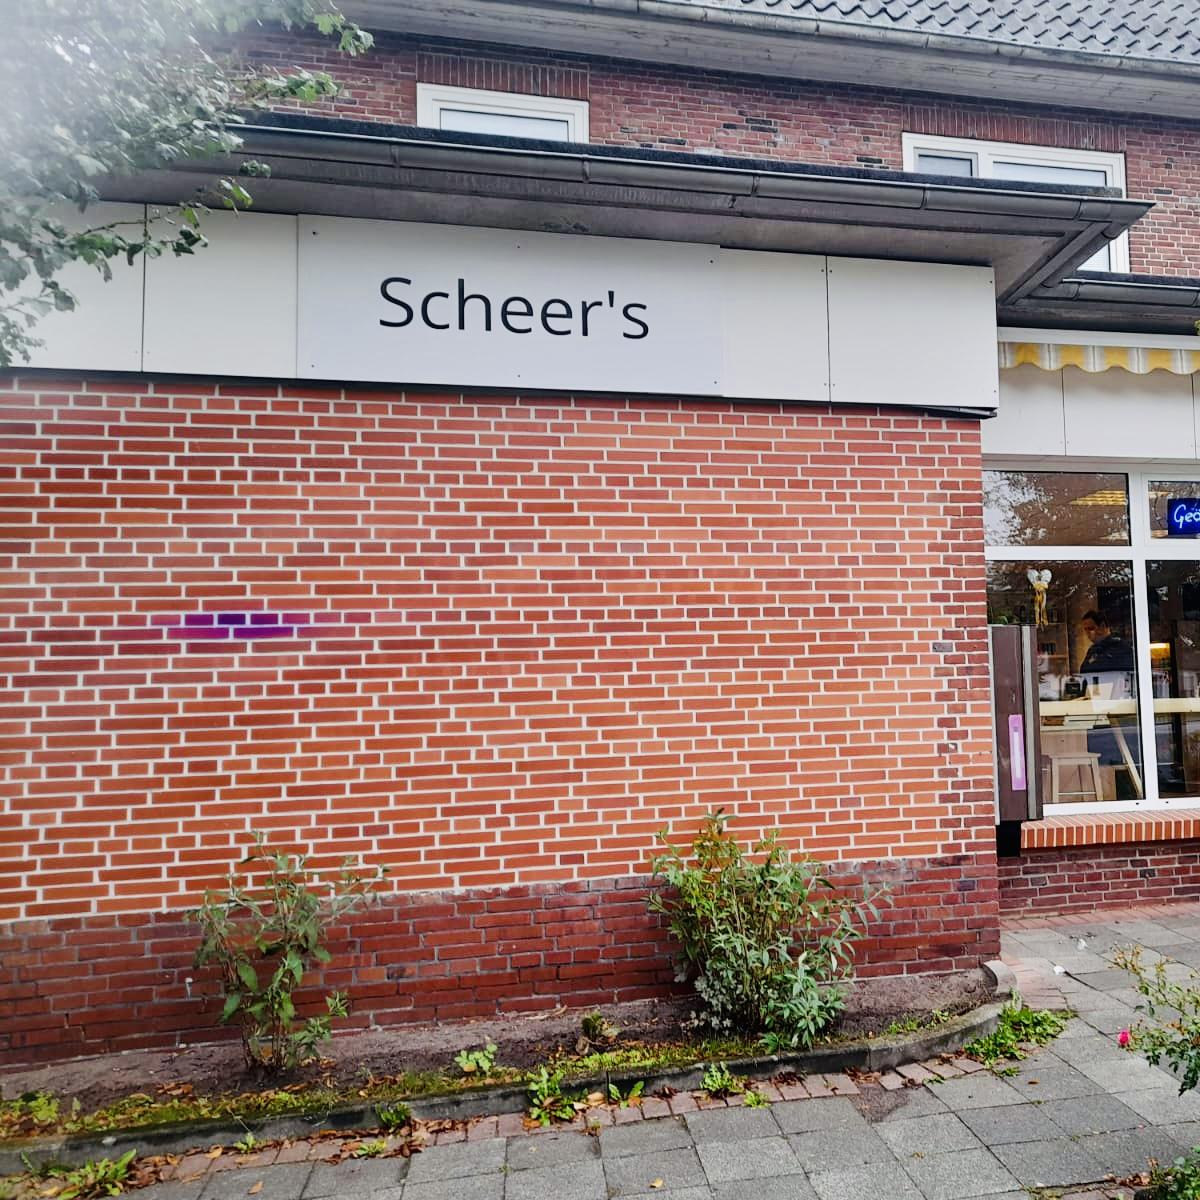 Restaurant "Scheer